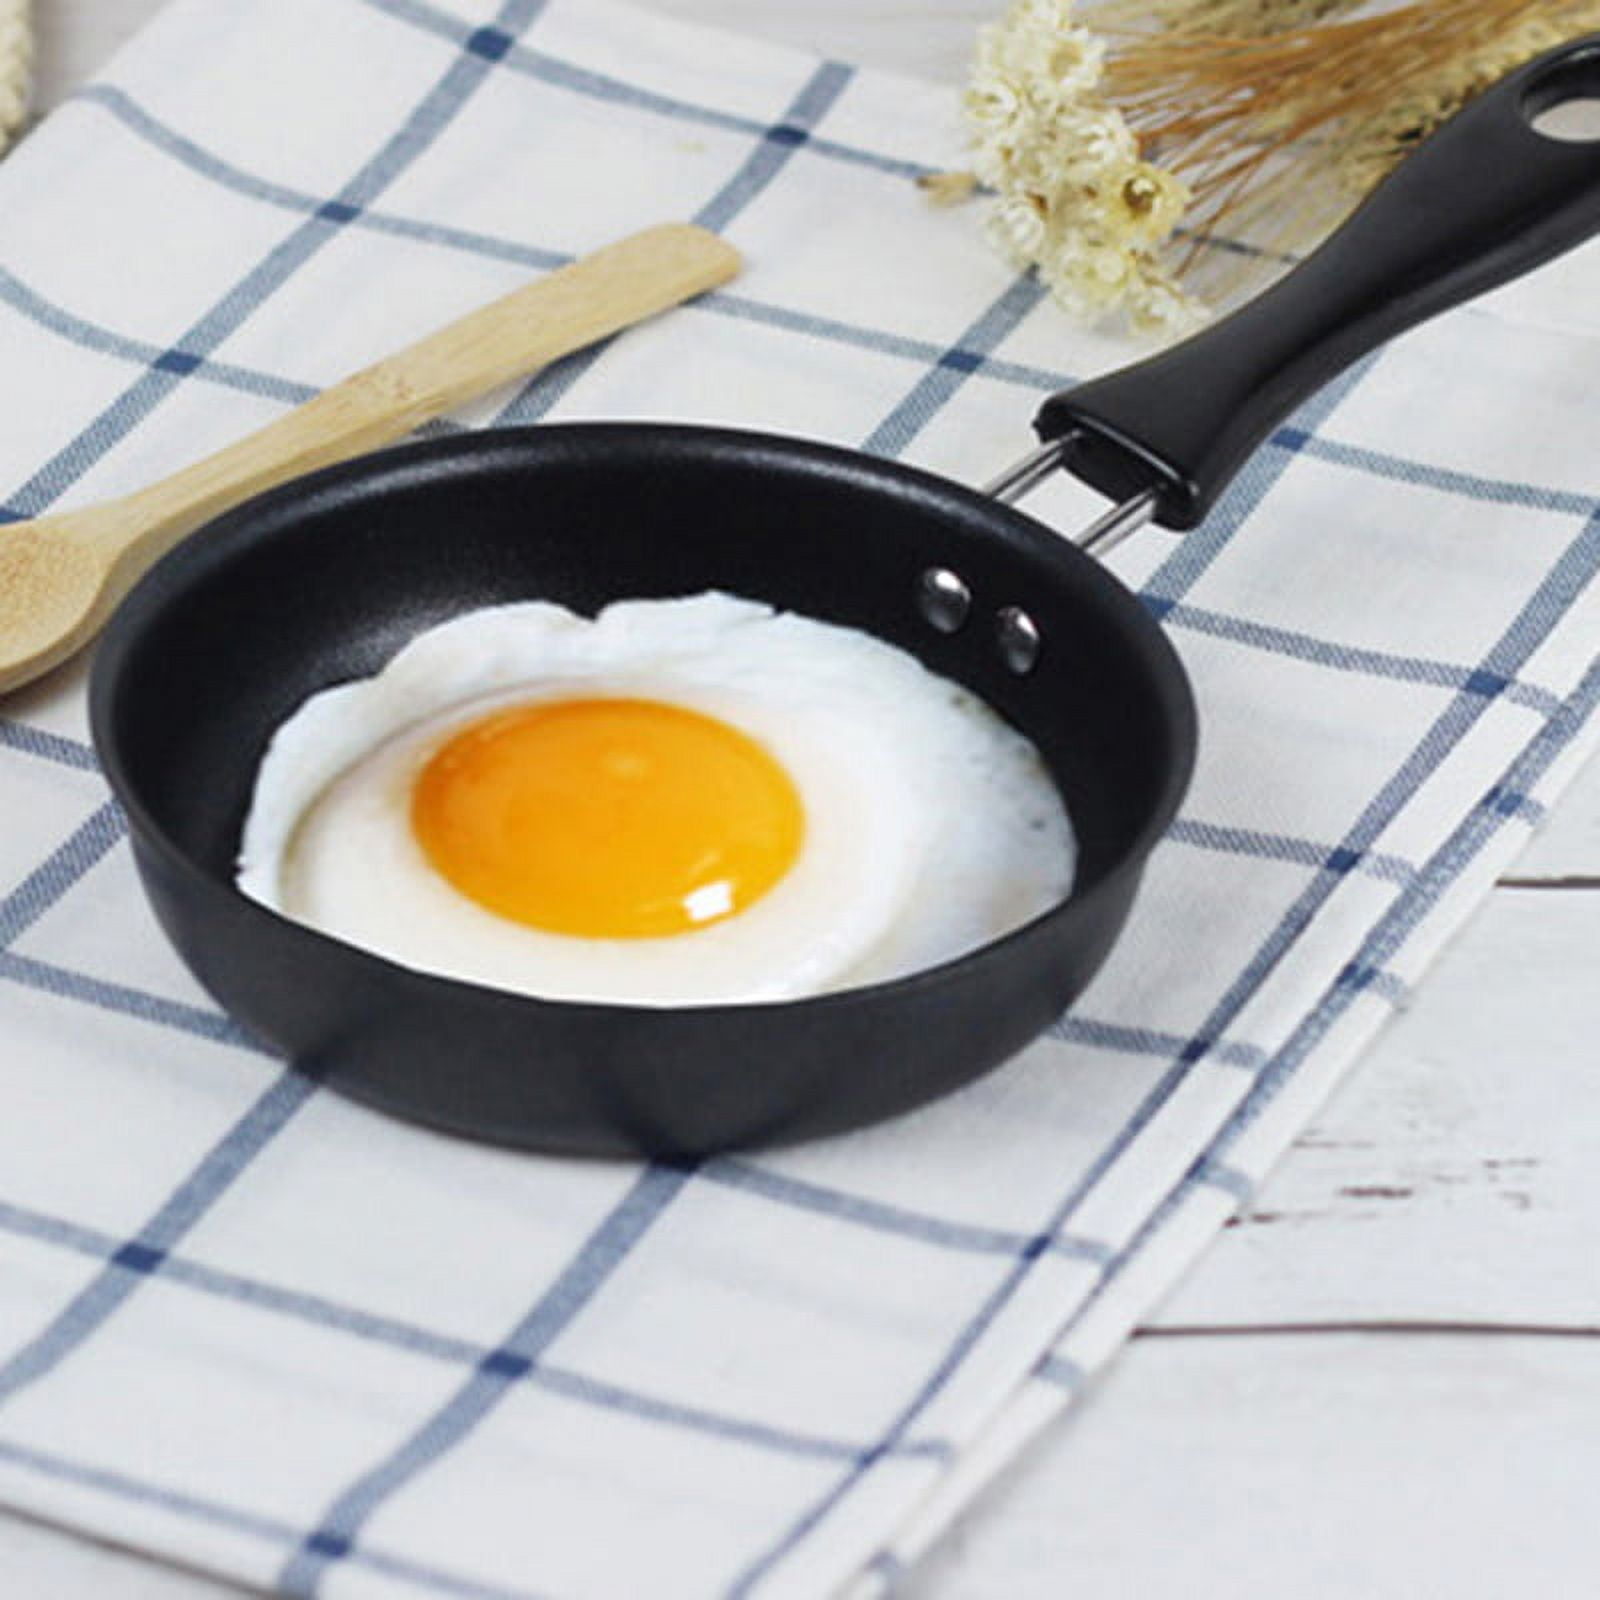 Mini frying pan, 12 cm, iron pan, non-stick coating, with handles